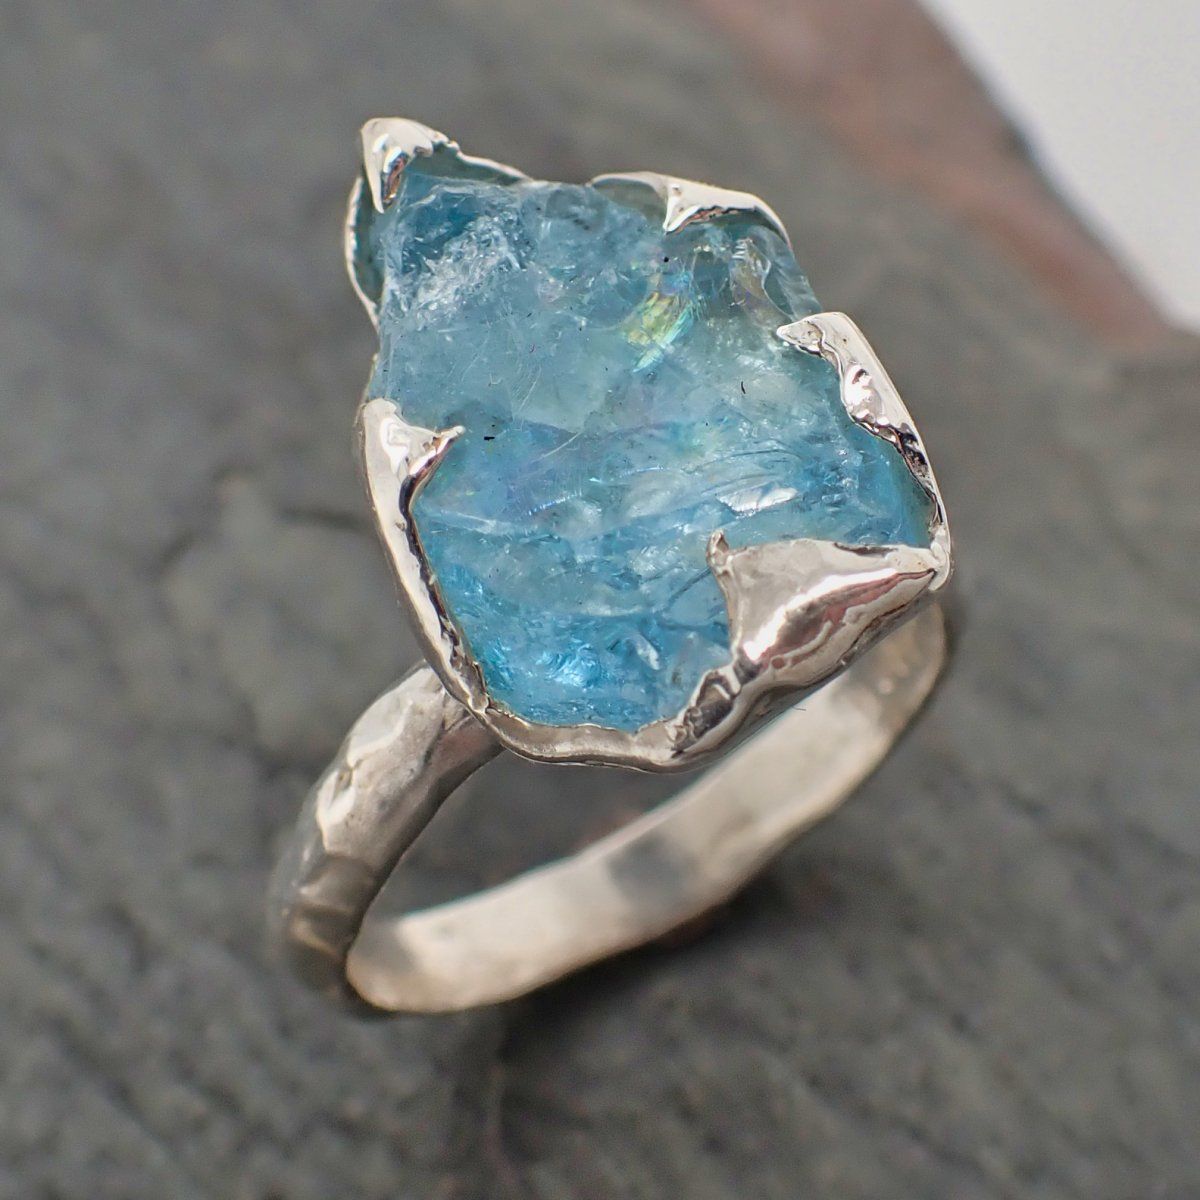 uncut aquamarine solitaire ring custom sterling silver one of a kind gemstone ring bespoke byangeline ss00061 Alternative Engagement